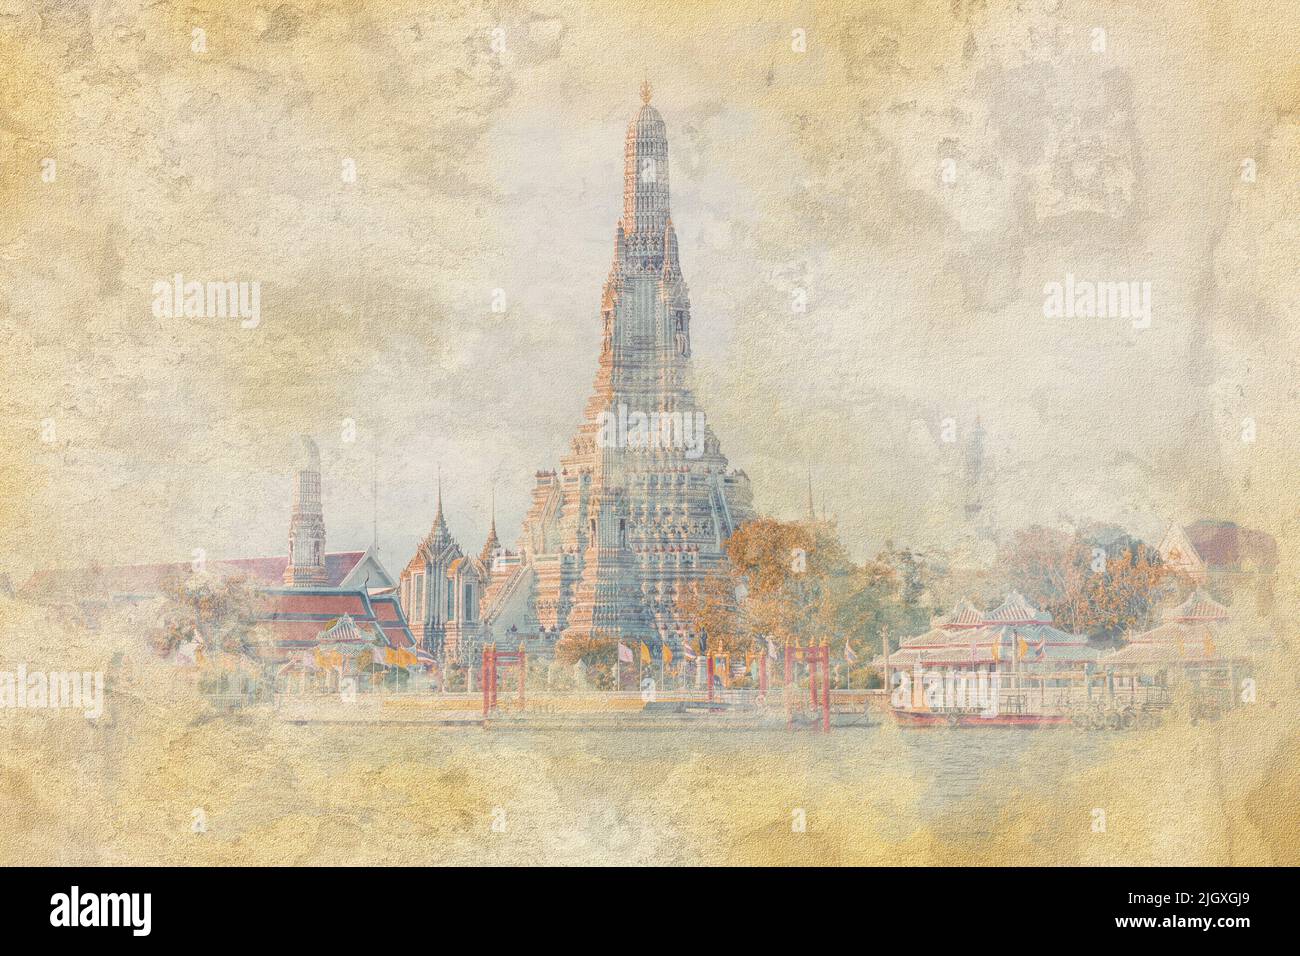 Wat Arun temple in Bangkok - Watercolor effect illustration Stock Photo